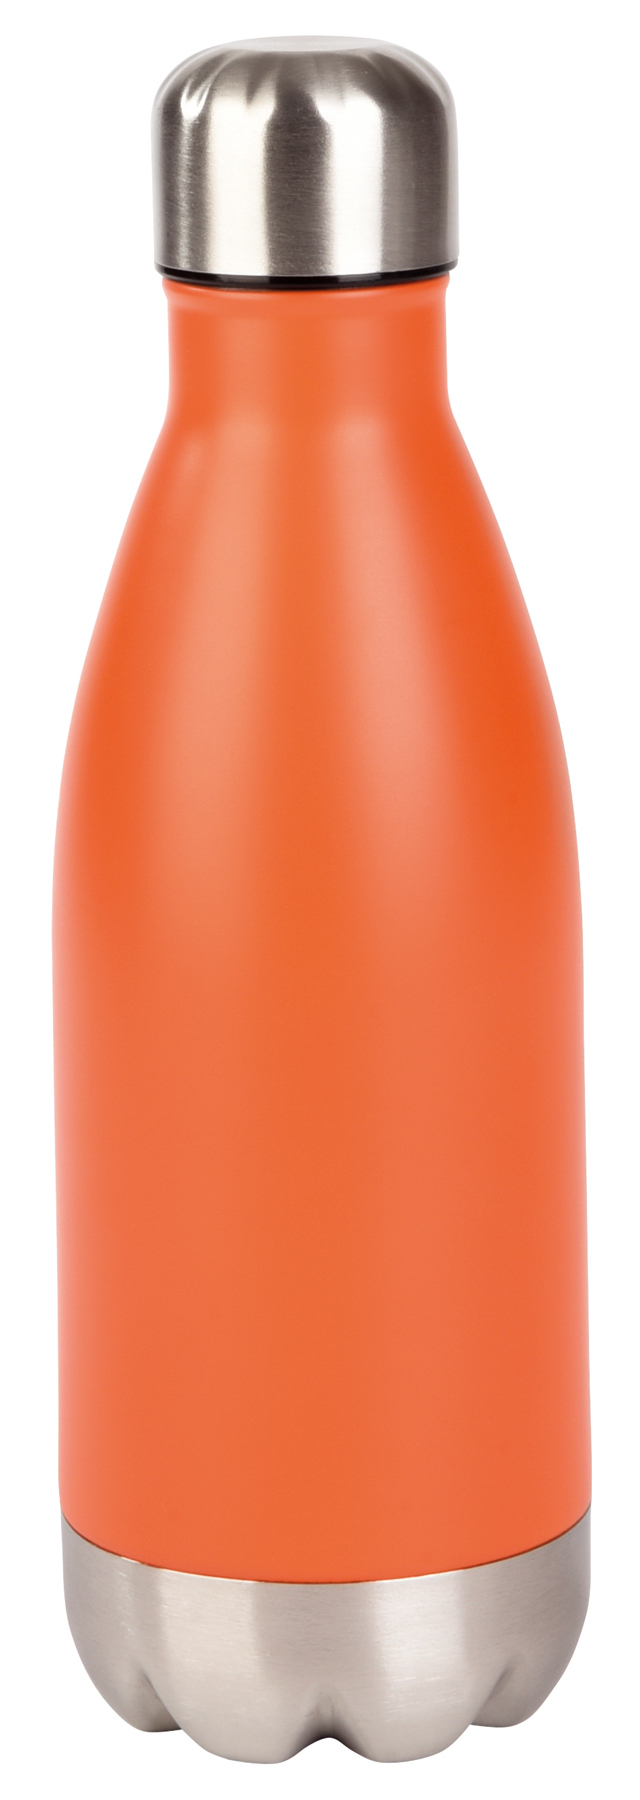 Travel flask PARKY - orange